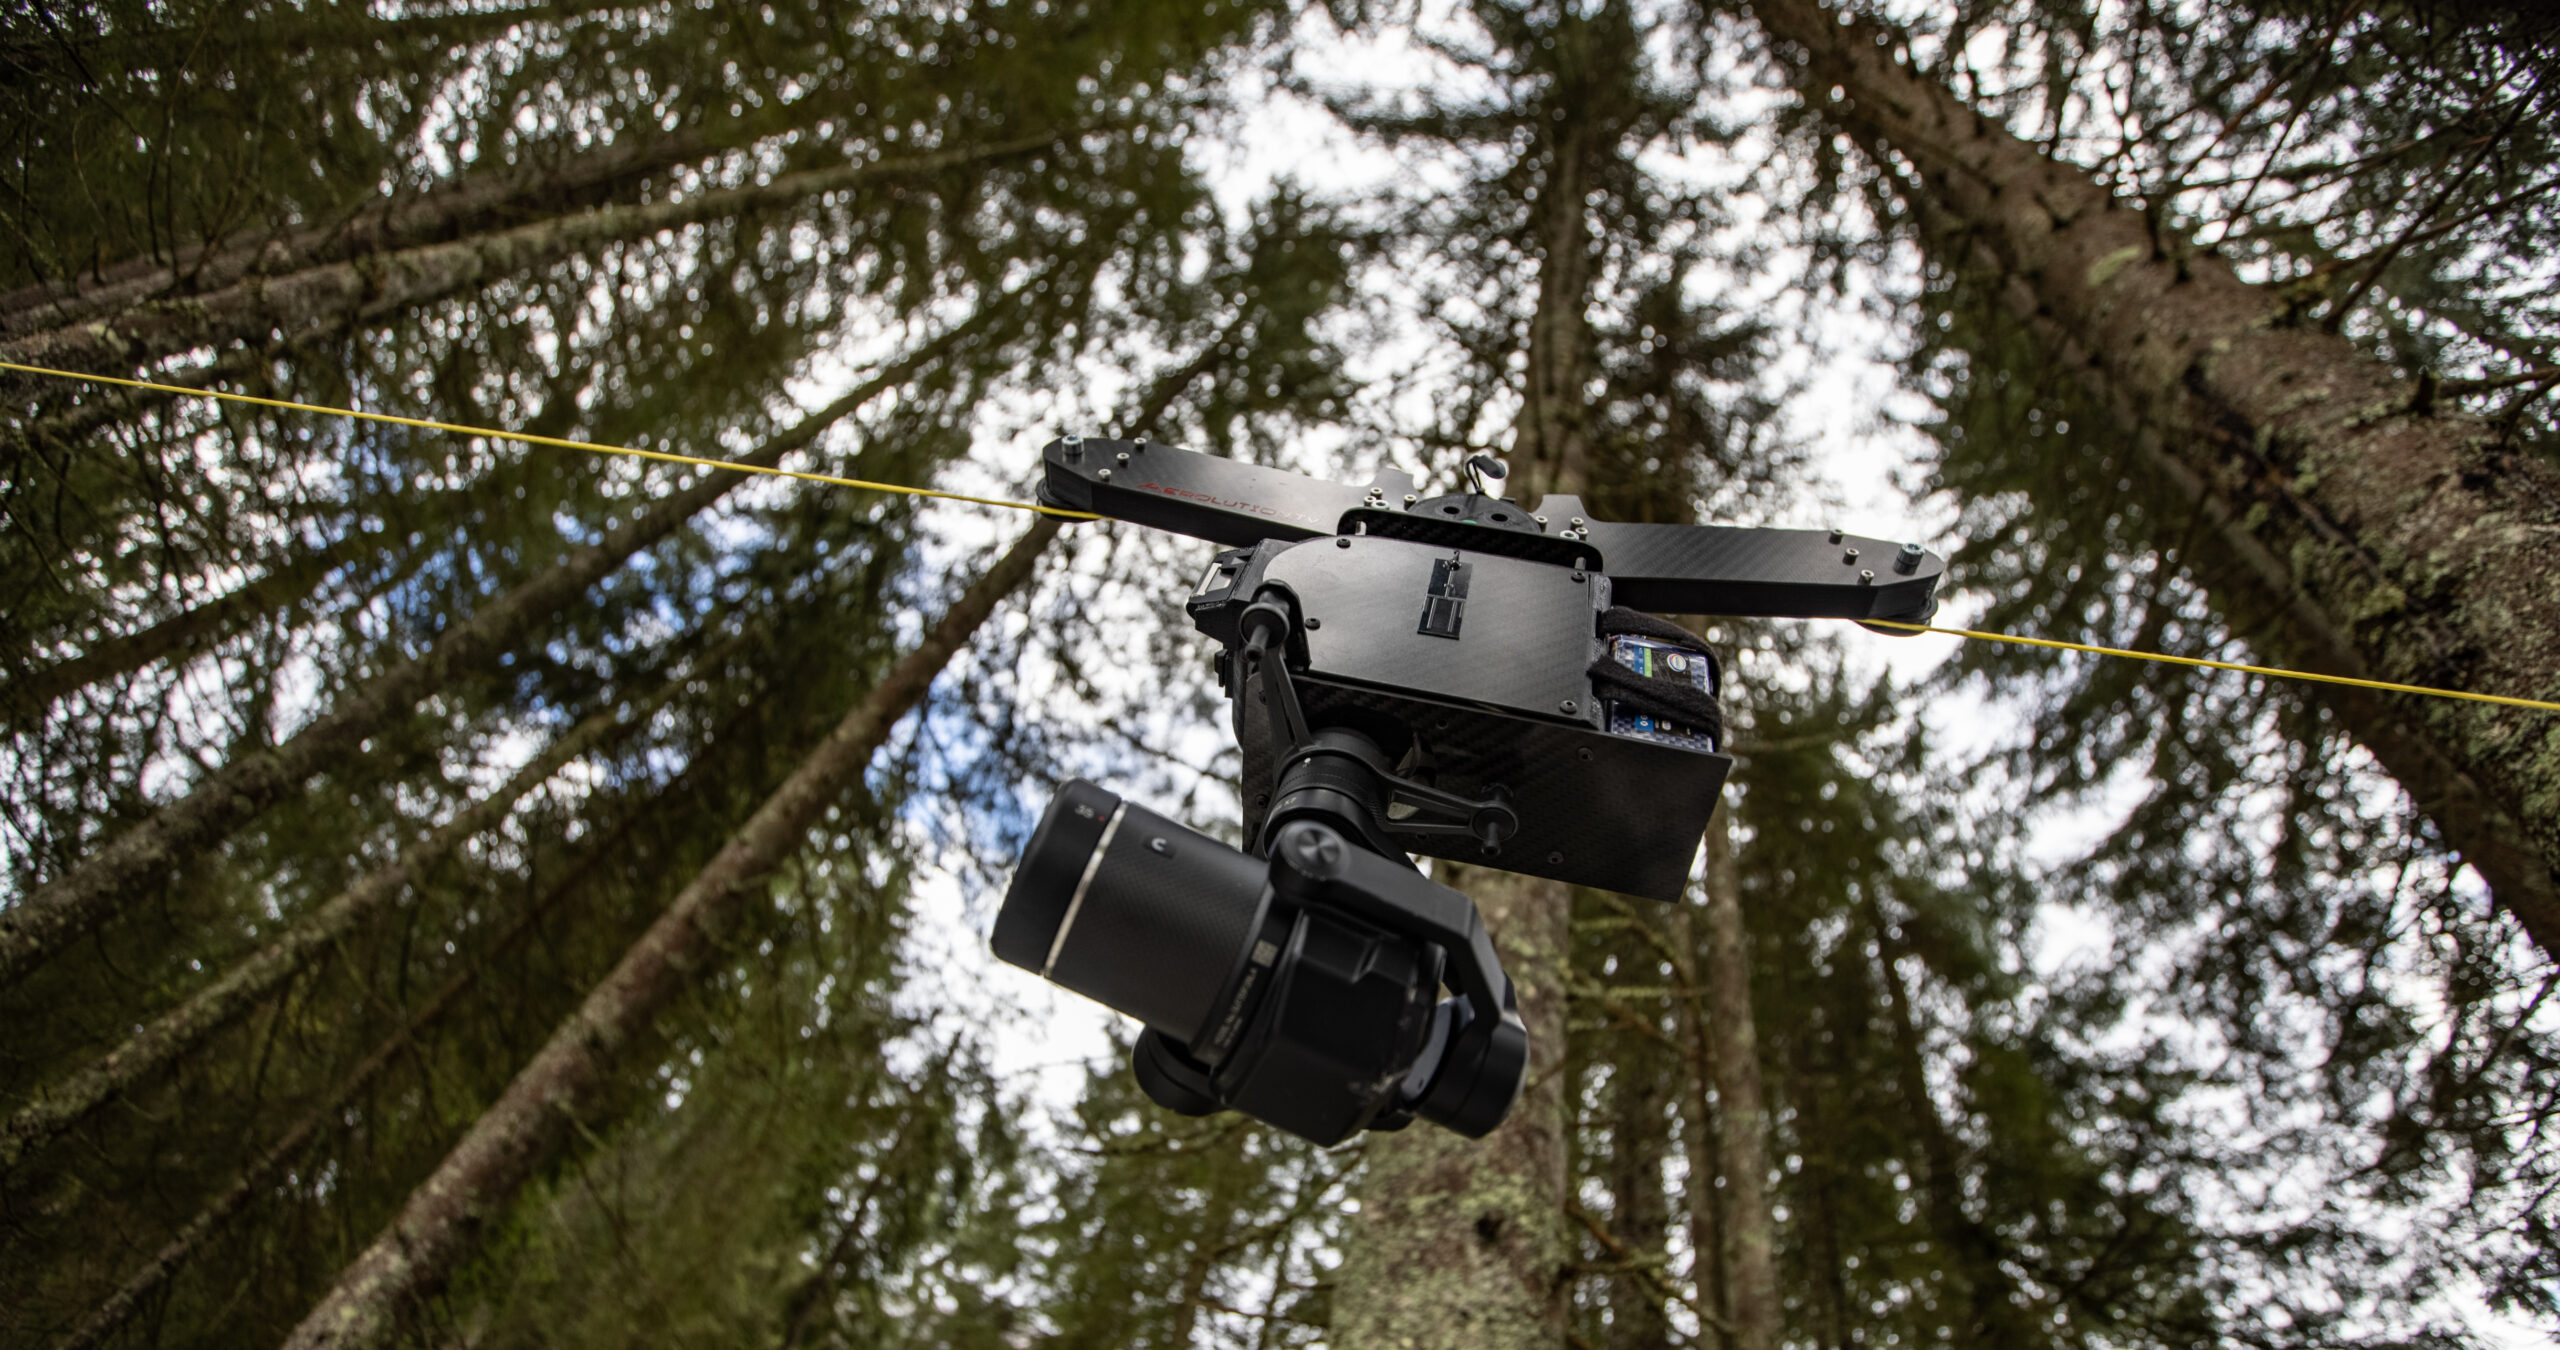 CableCam Seilkamera Rope cam wire cam Kamera bewegte Kamerafhrten Filmset Filmaufnahmen dynmaisch Drohnenpilot